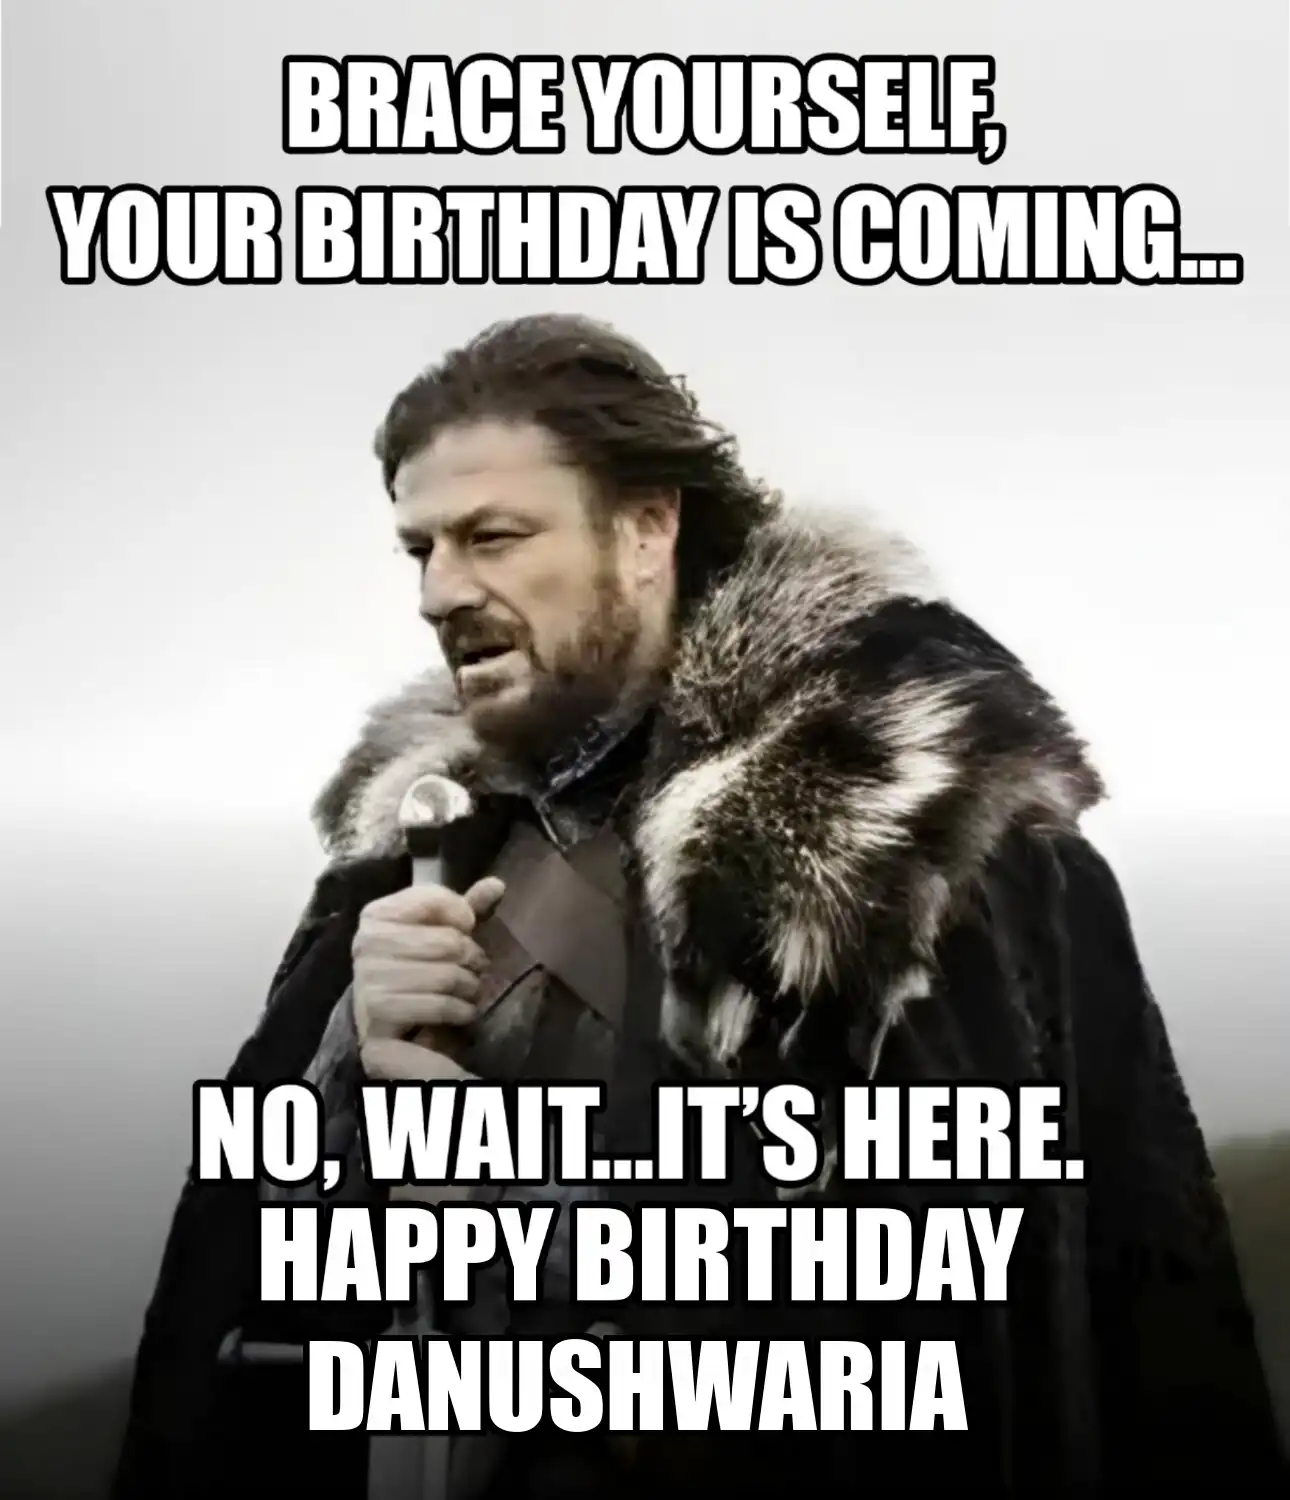 Happy Birthday Danushwaria Brace Yourself Your Birthday Is Coming Meme